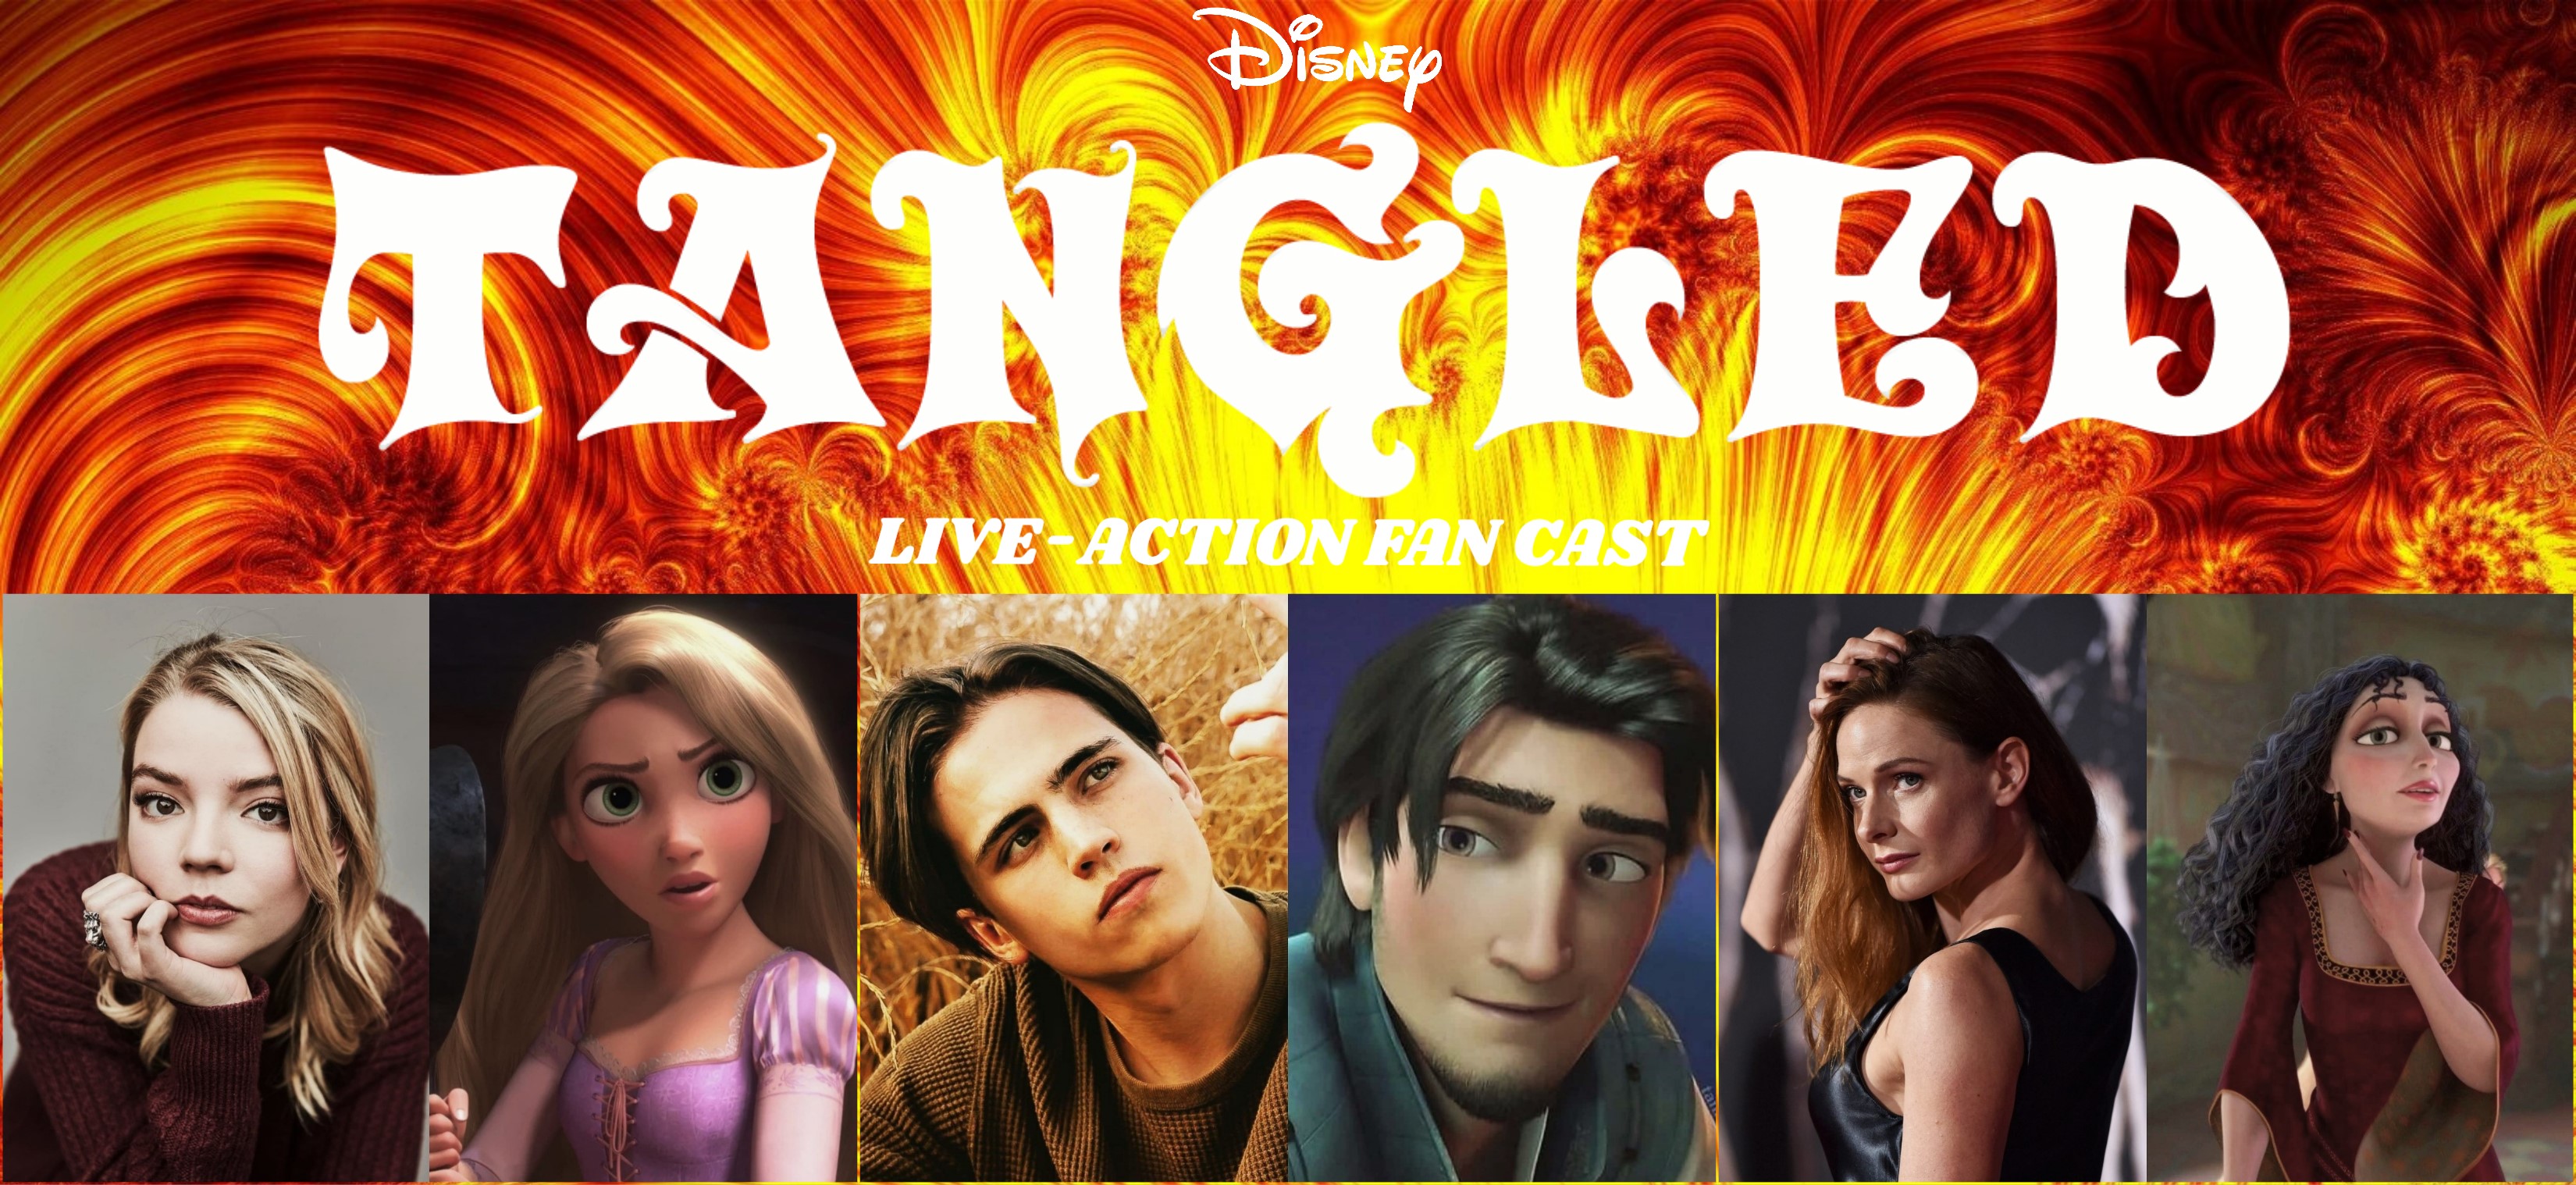 Disney's Tangled Live-Action Fan Cast by TristanHartup on DeviantArt